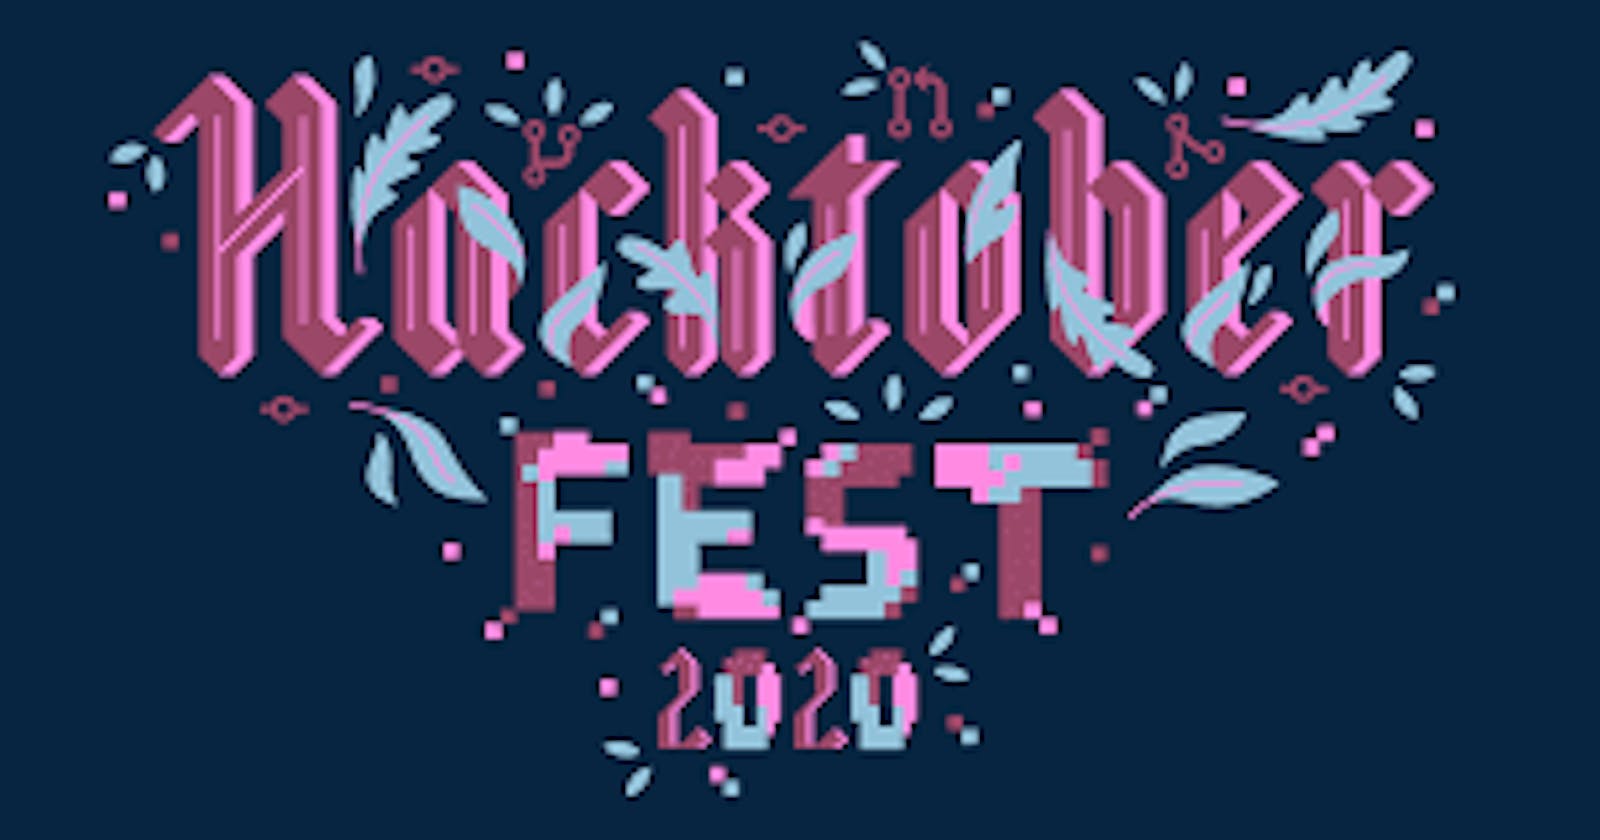 Hacktoberfest 2020: My Journey as a contributor